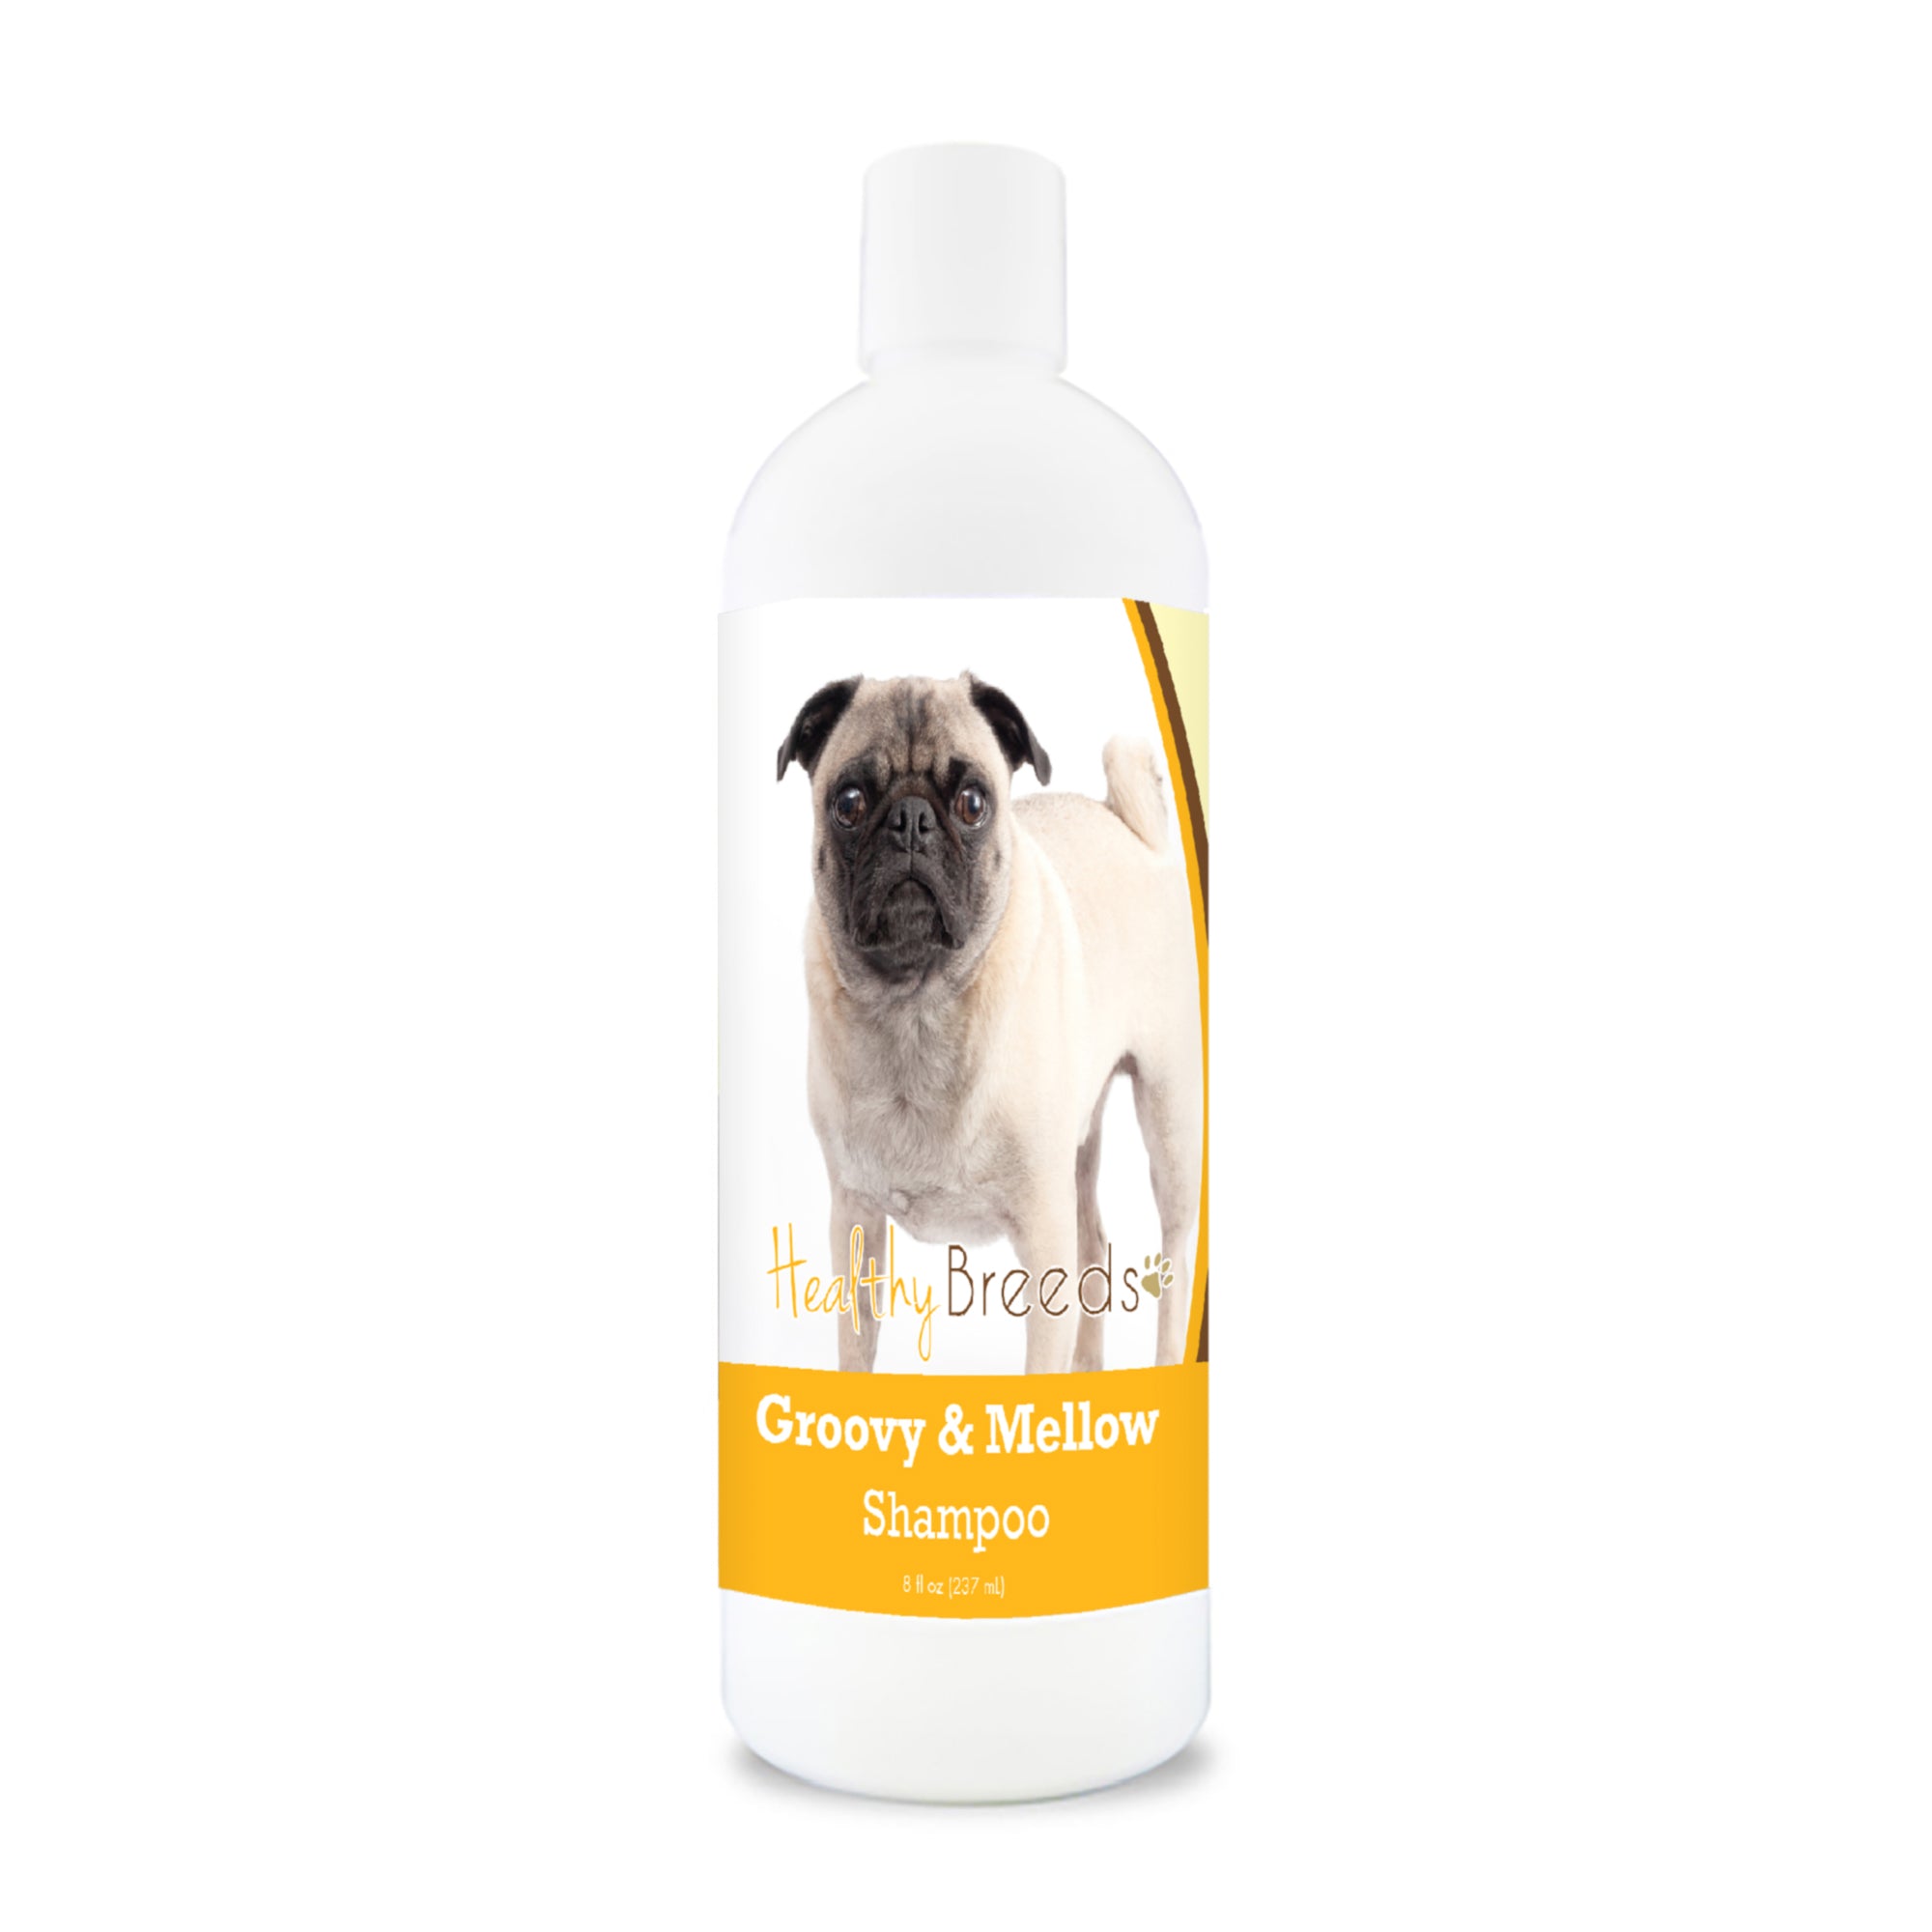 Pug Groovy & Mellow Shampoo 8 oz